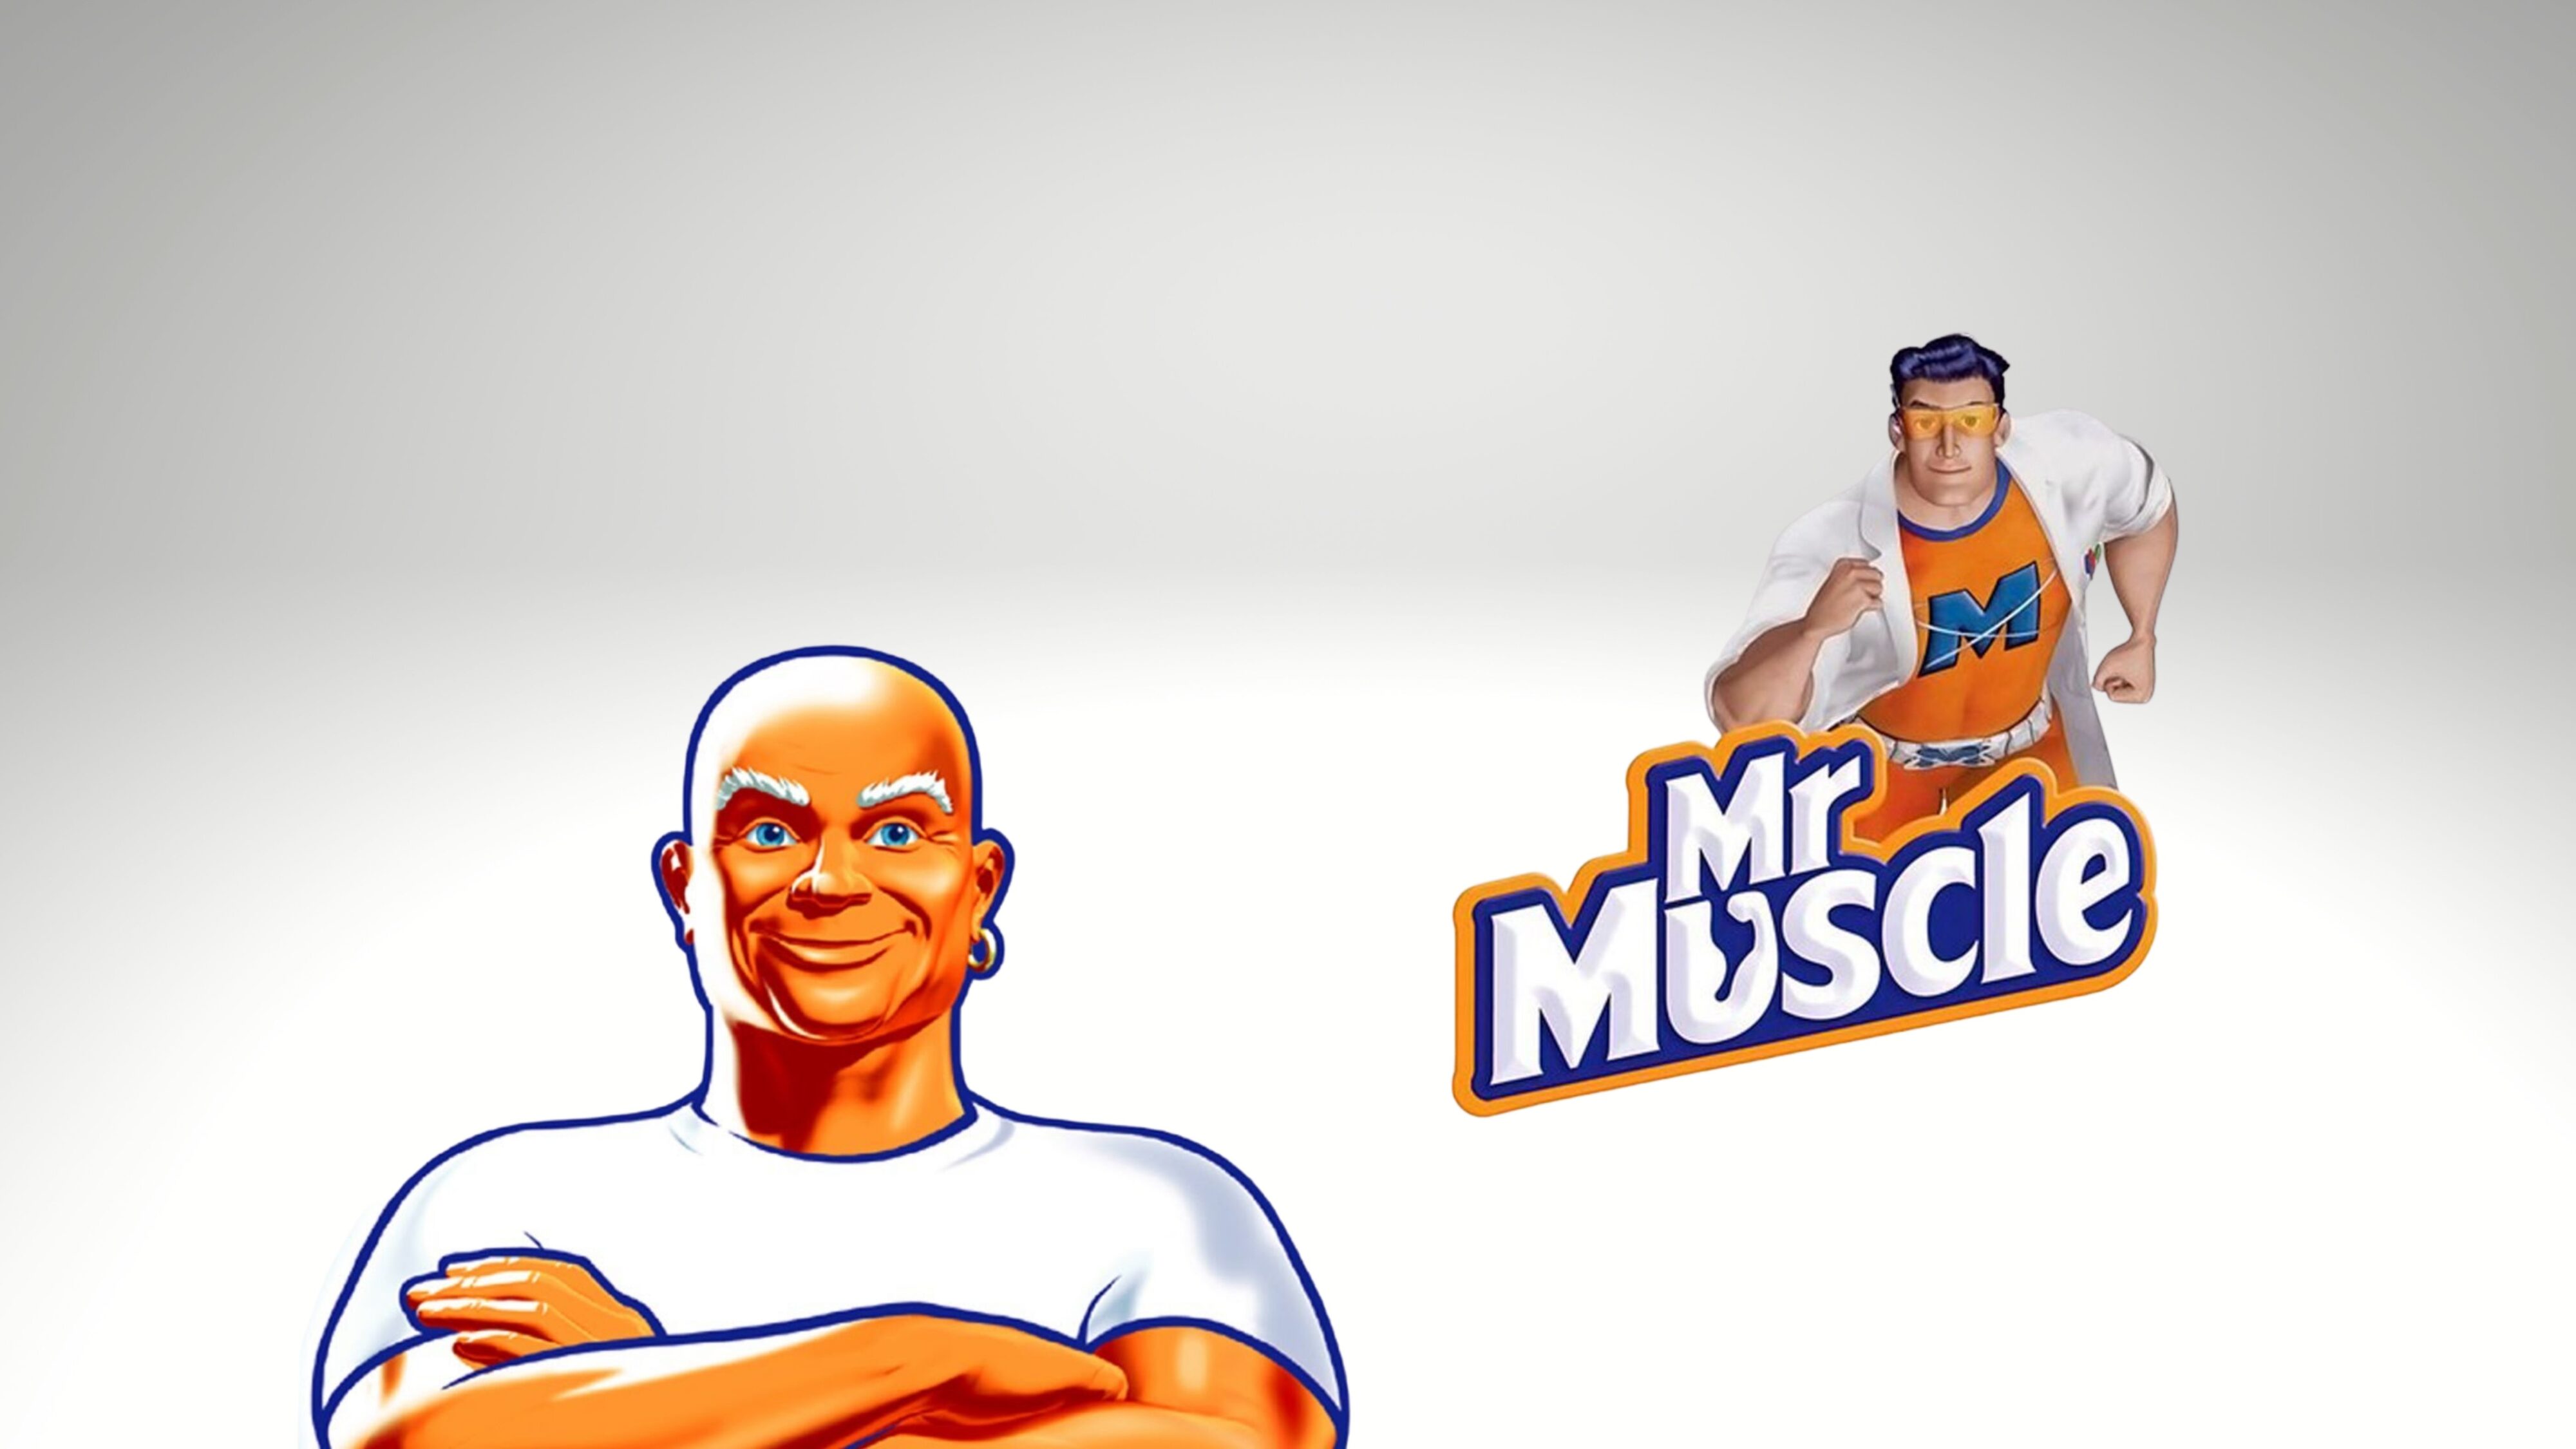 Mr Muscle, Mr Proper